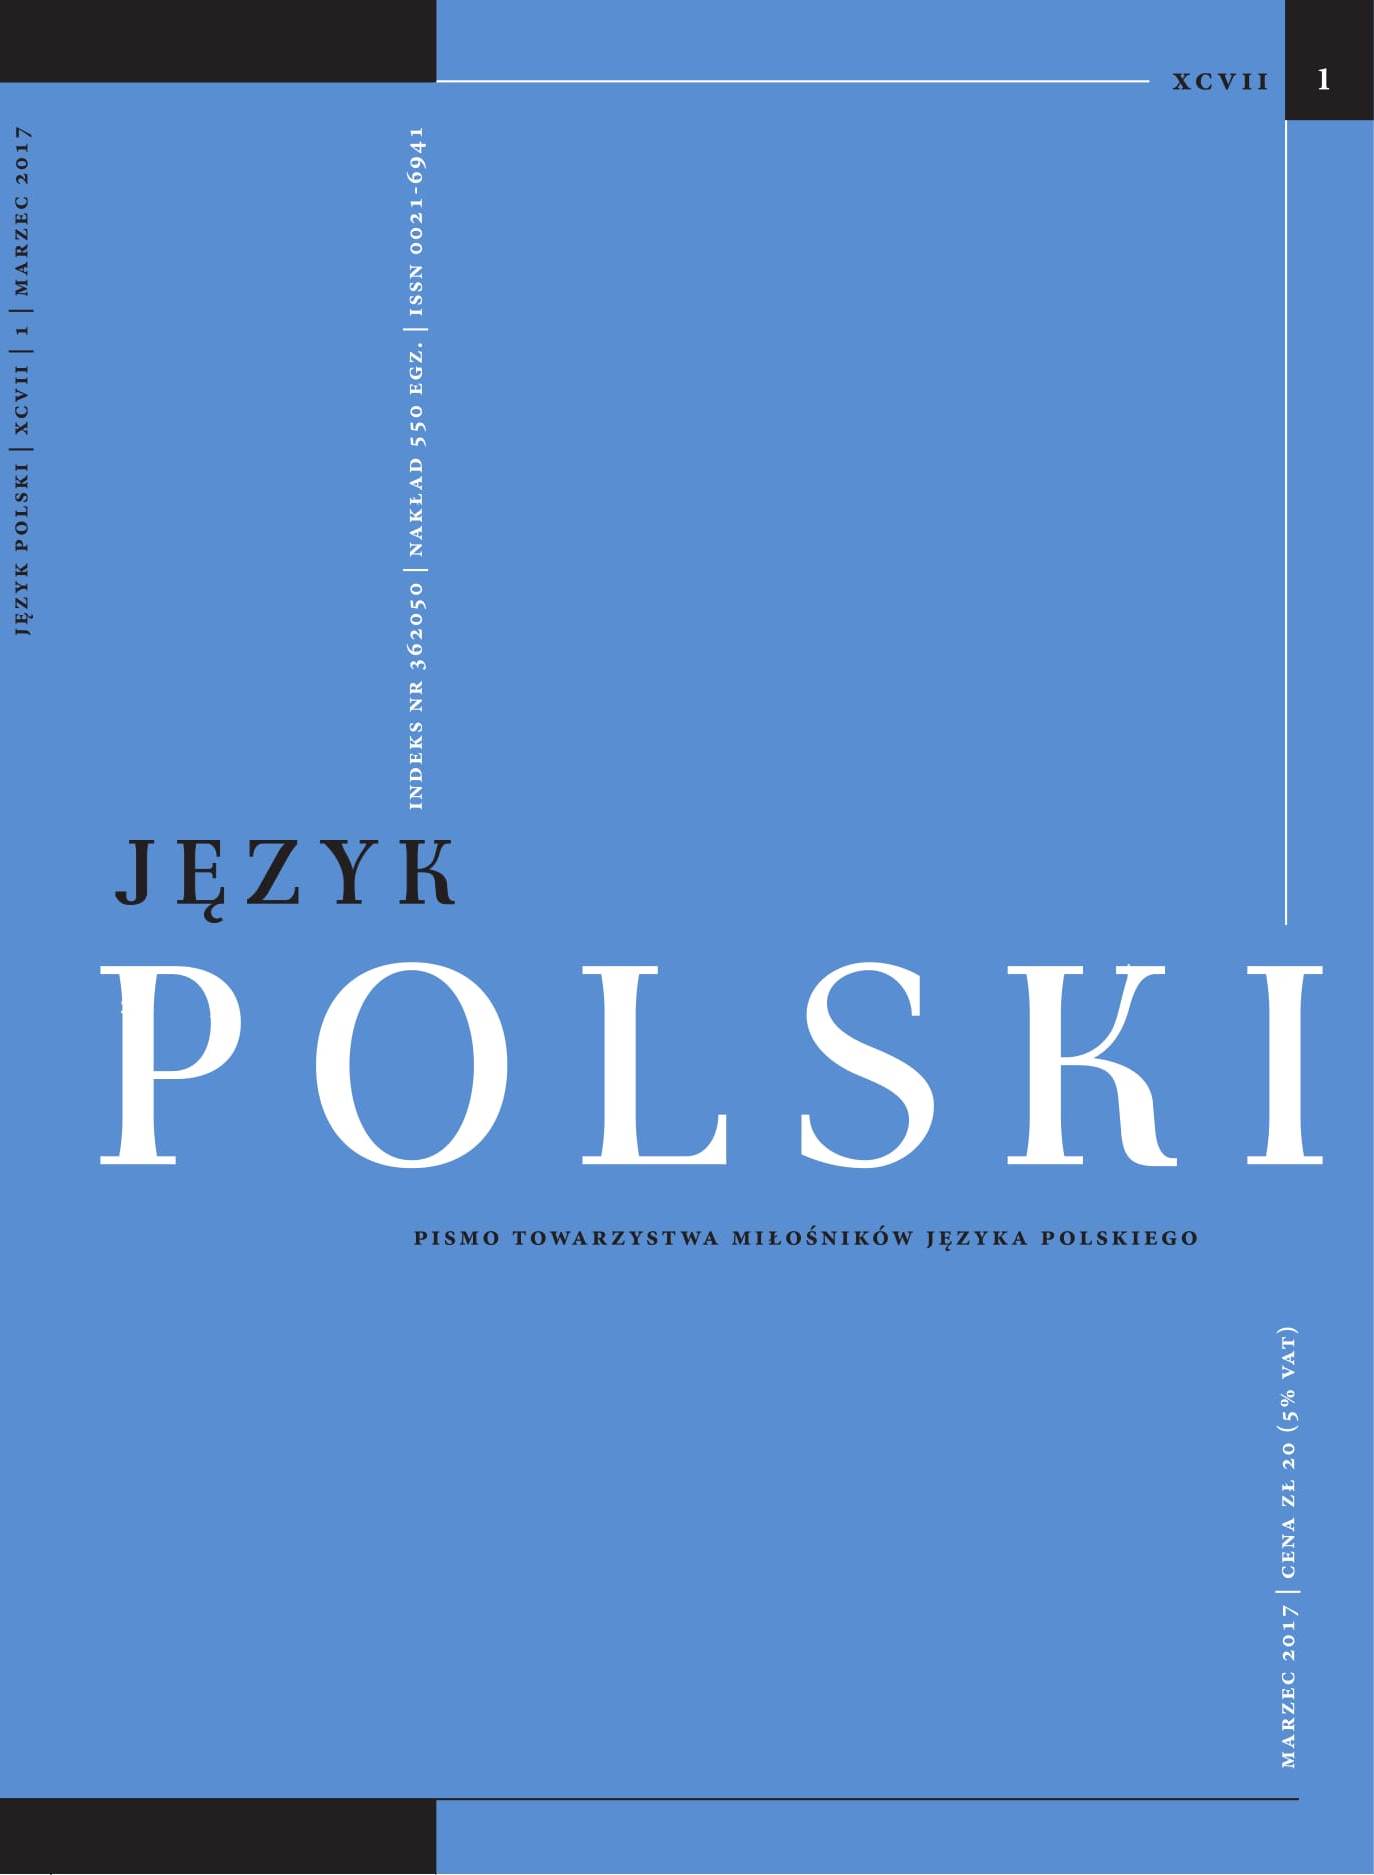 Types of metonymic motivation in Polish euphemisms Cover Image